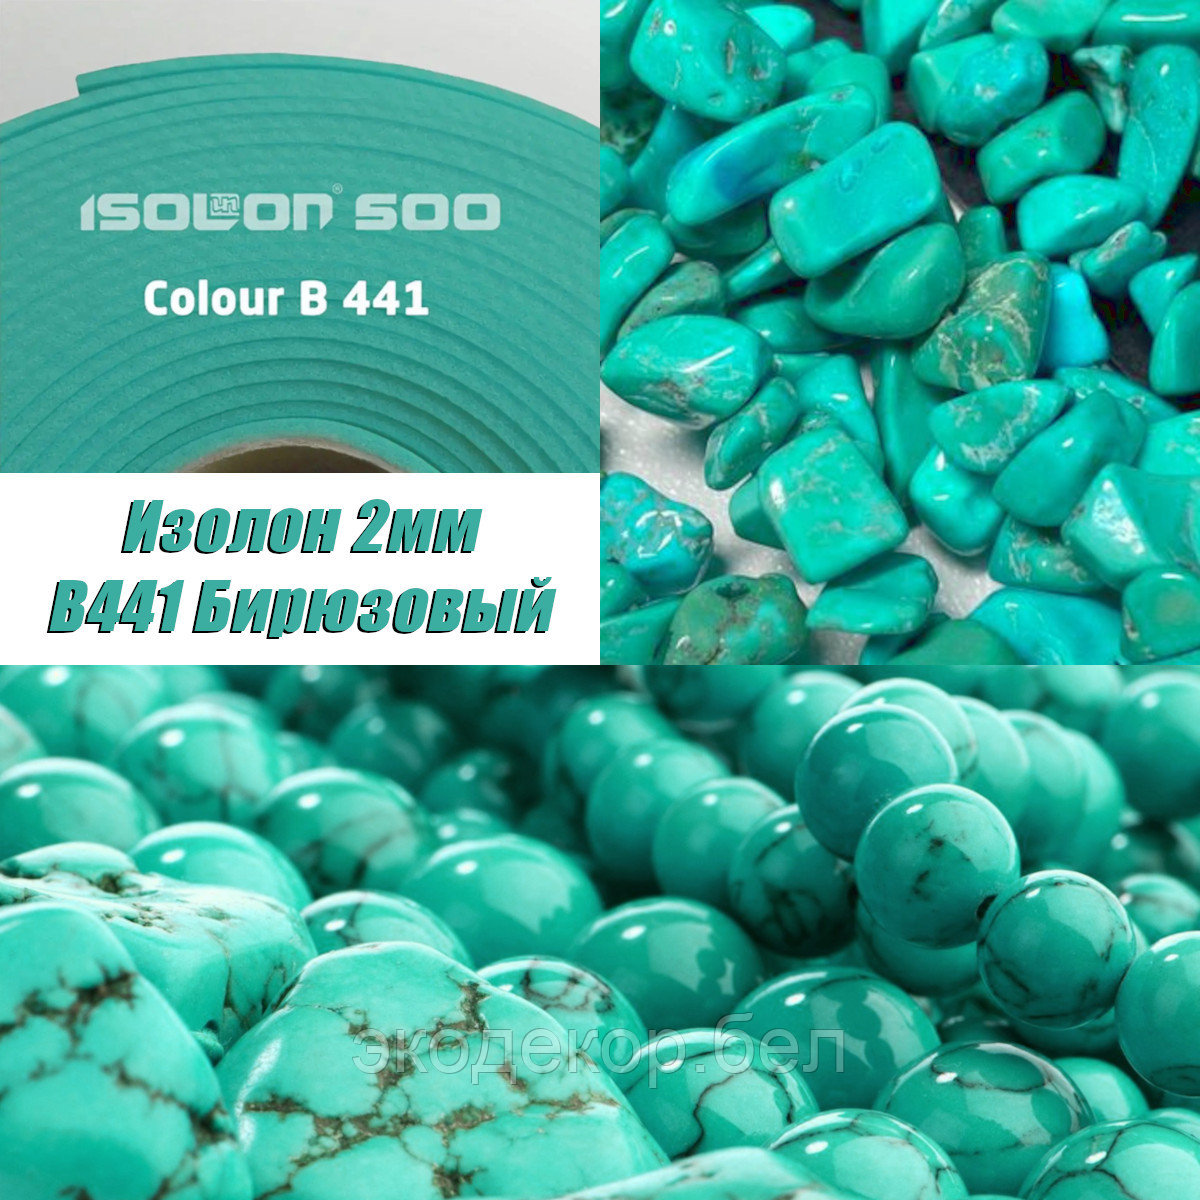 Isolon 500 (Изолон) 0,75м. B441 Бирюзовый, 2мм